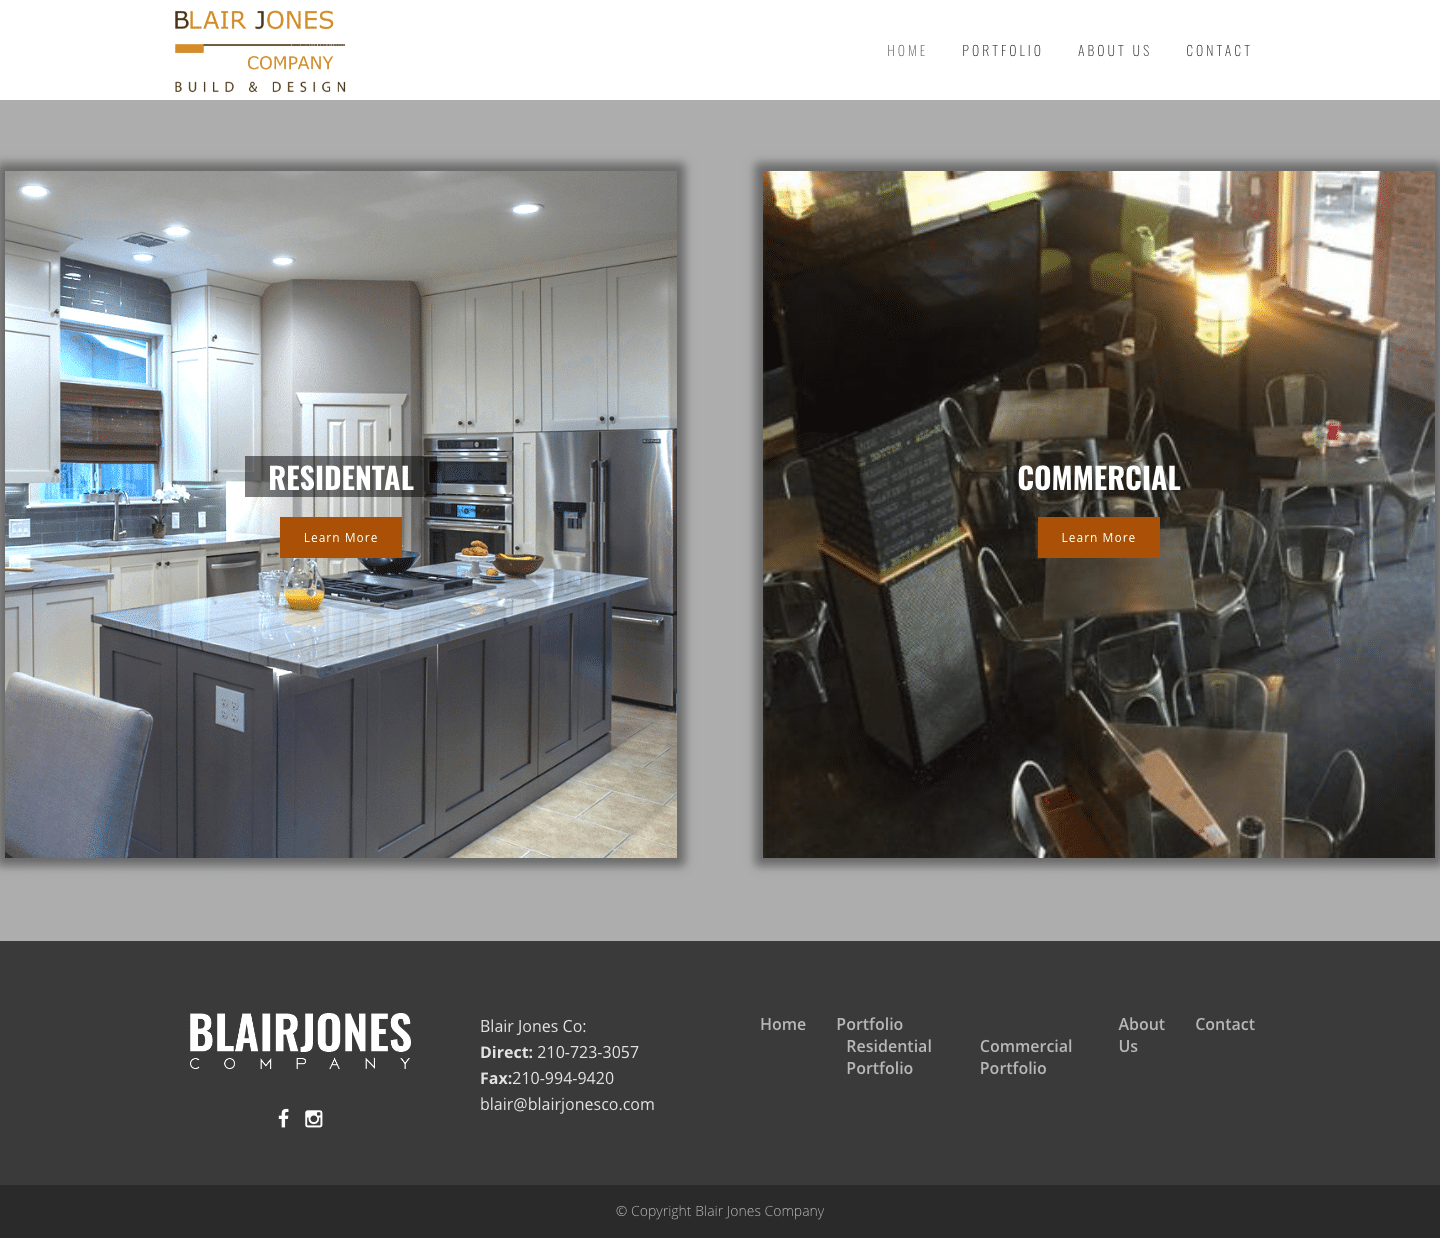 blairjonesco homepage by innov8